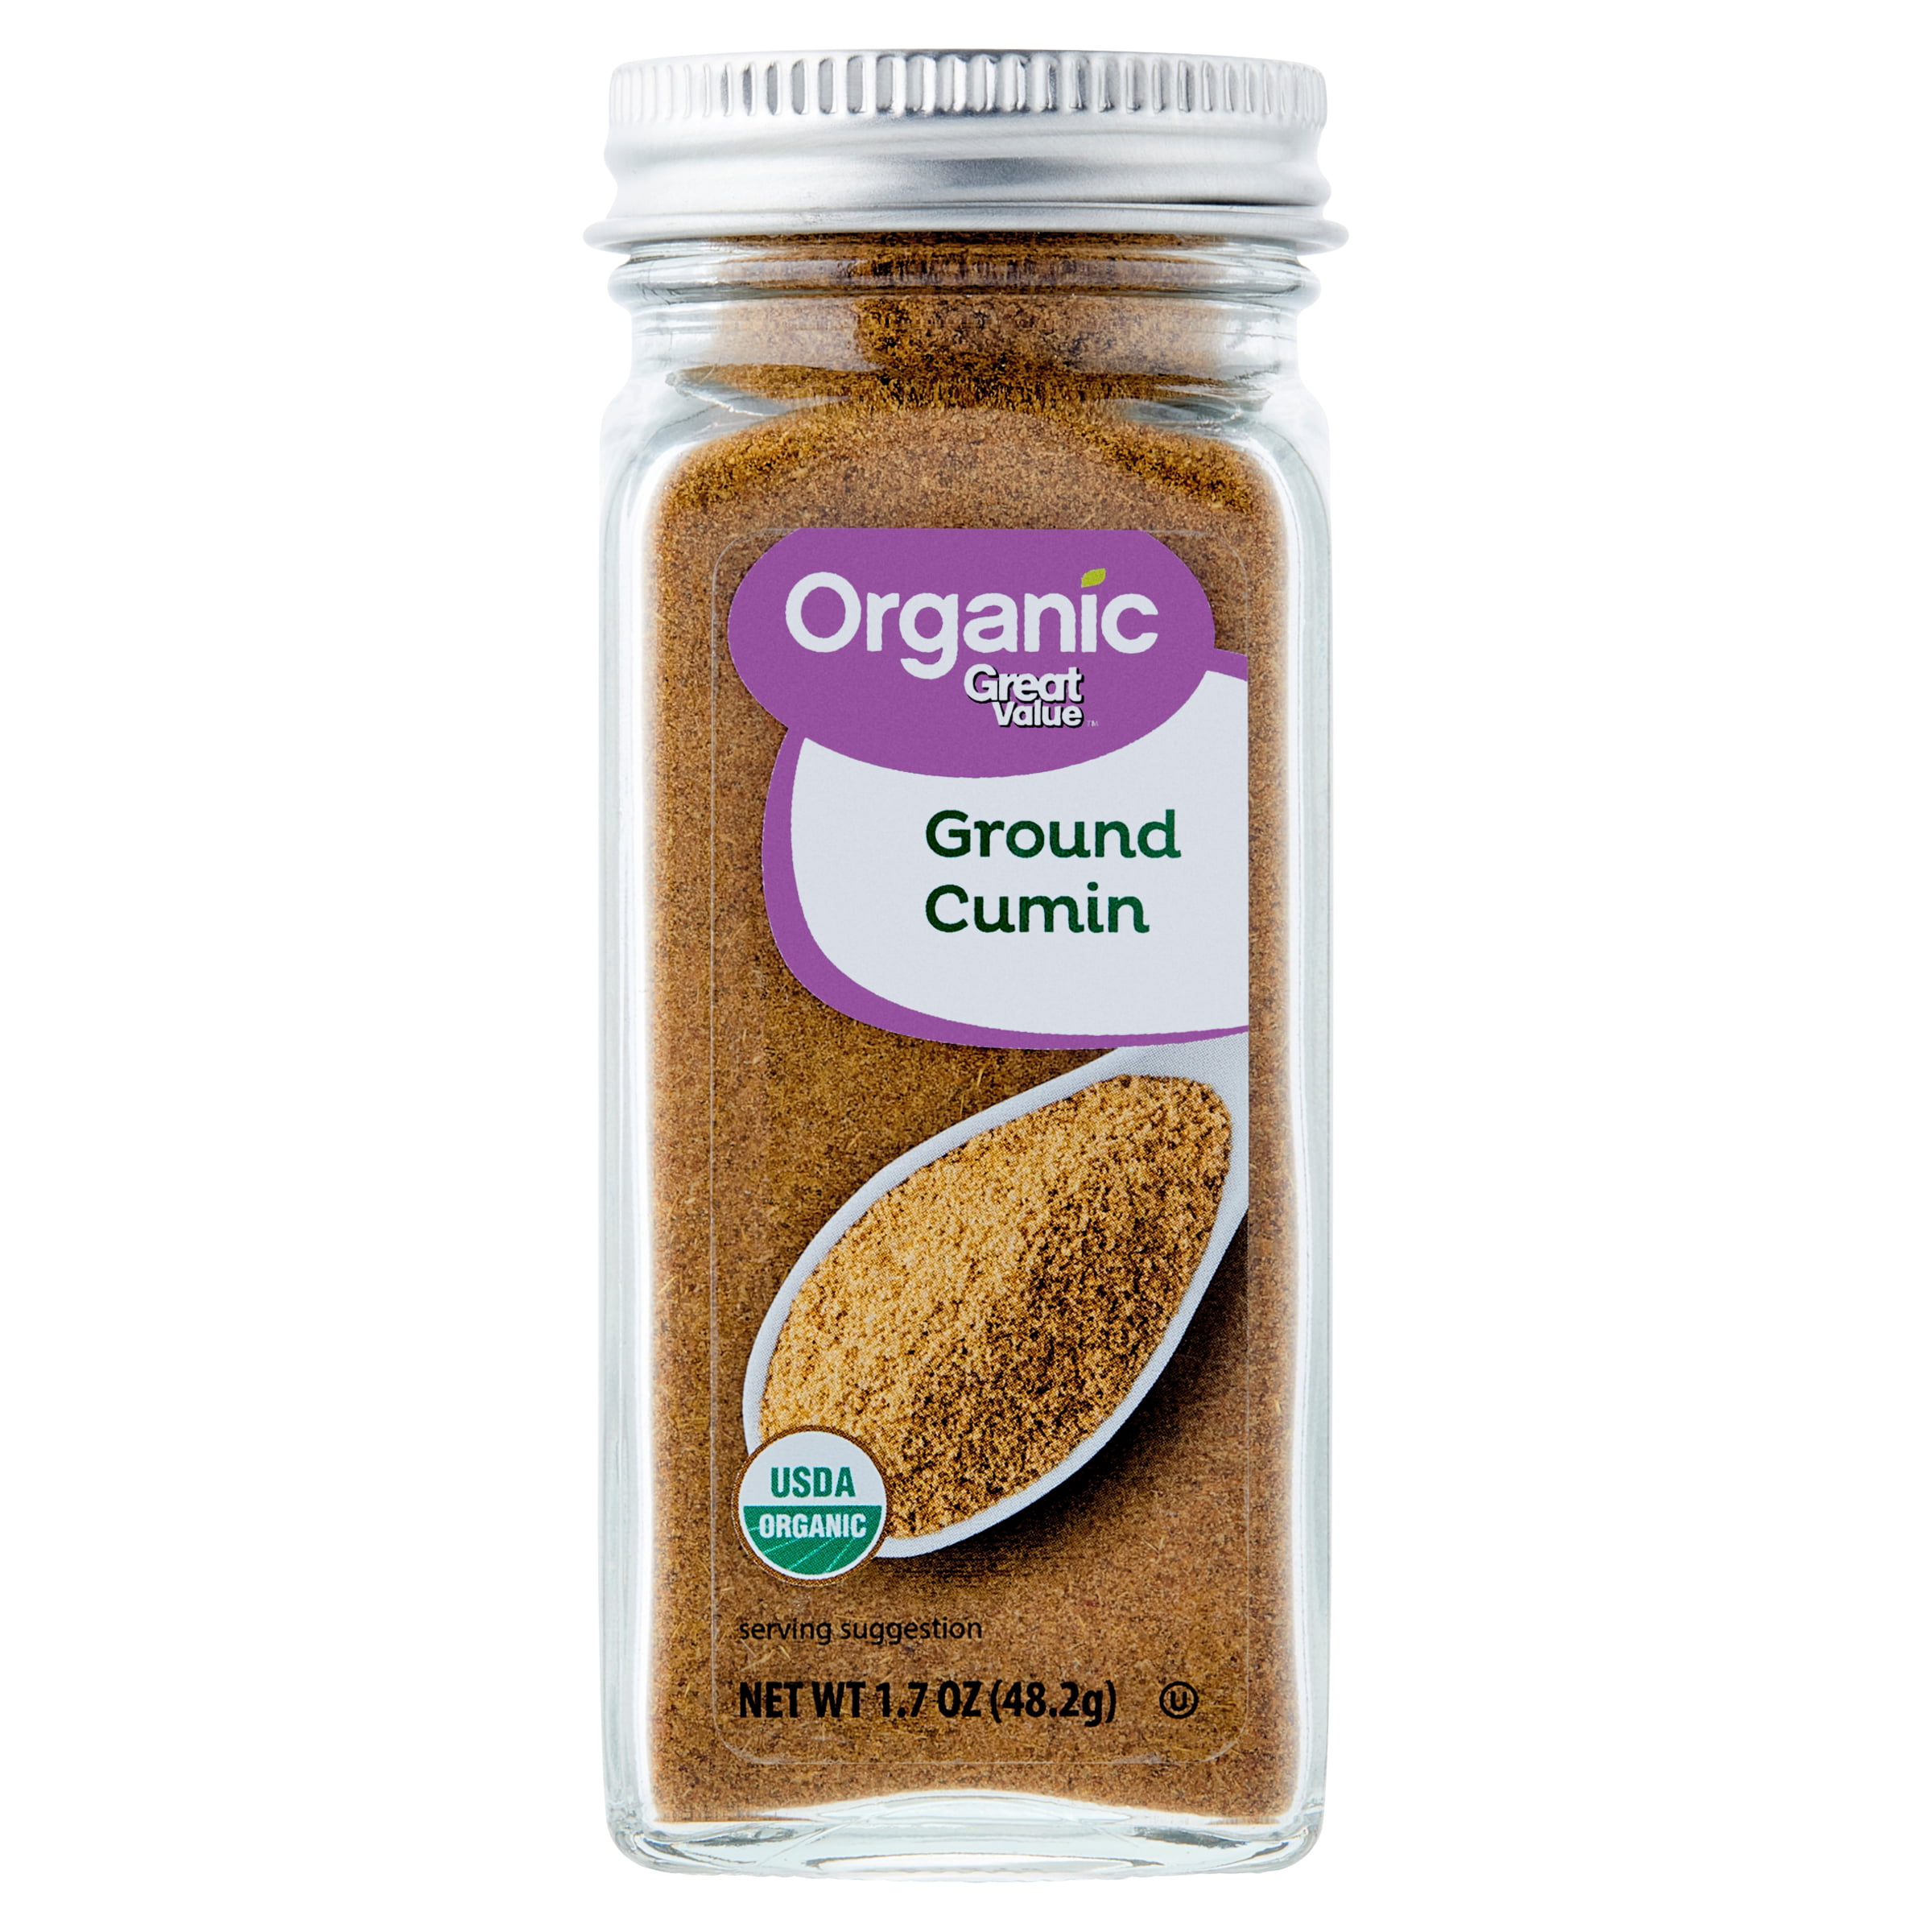 Great Value Organic Ground Cumin, 1.7 oz